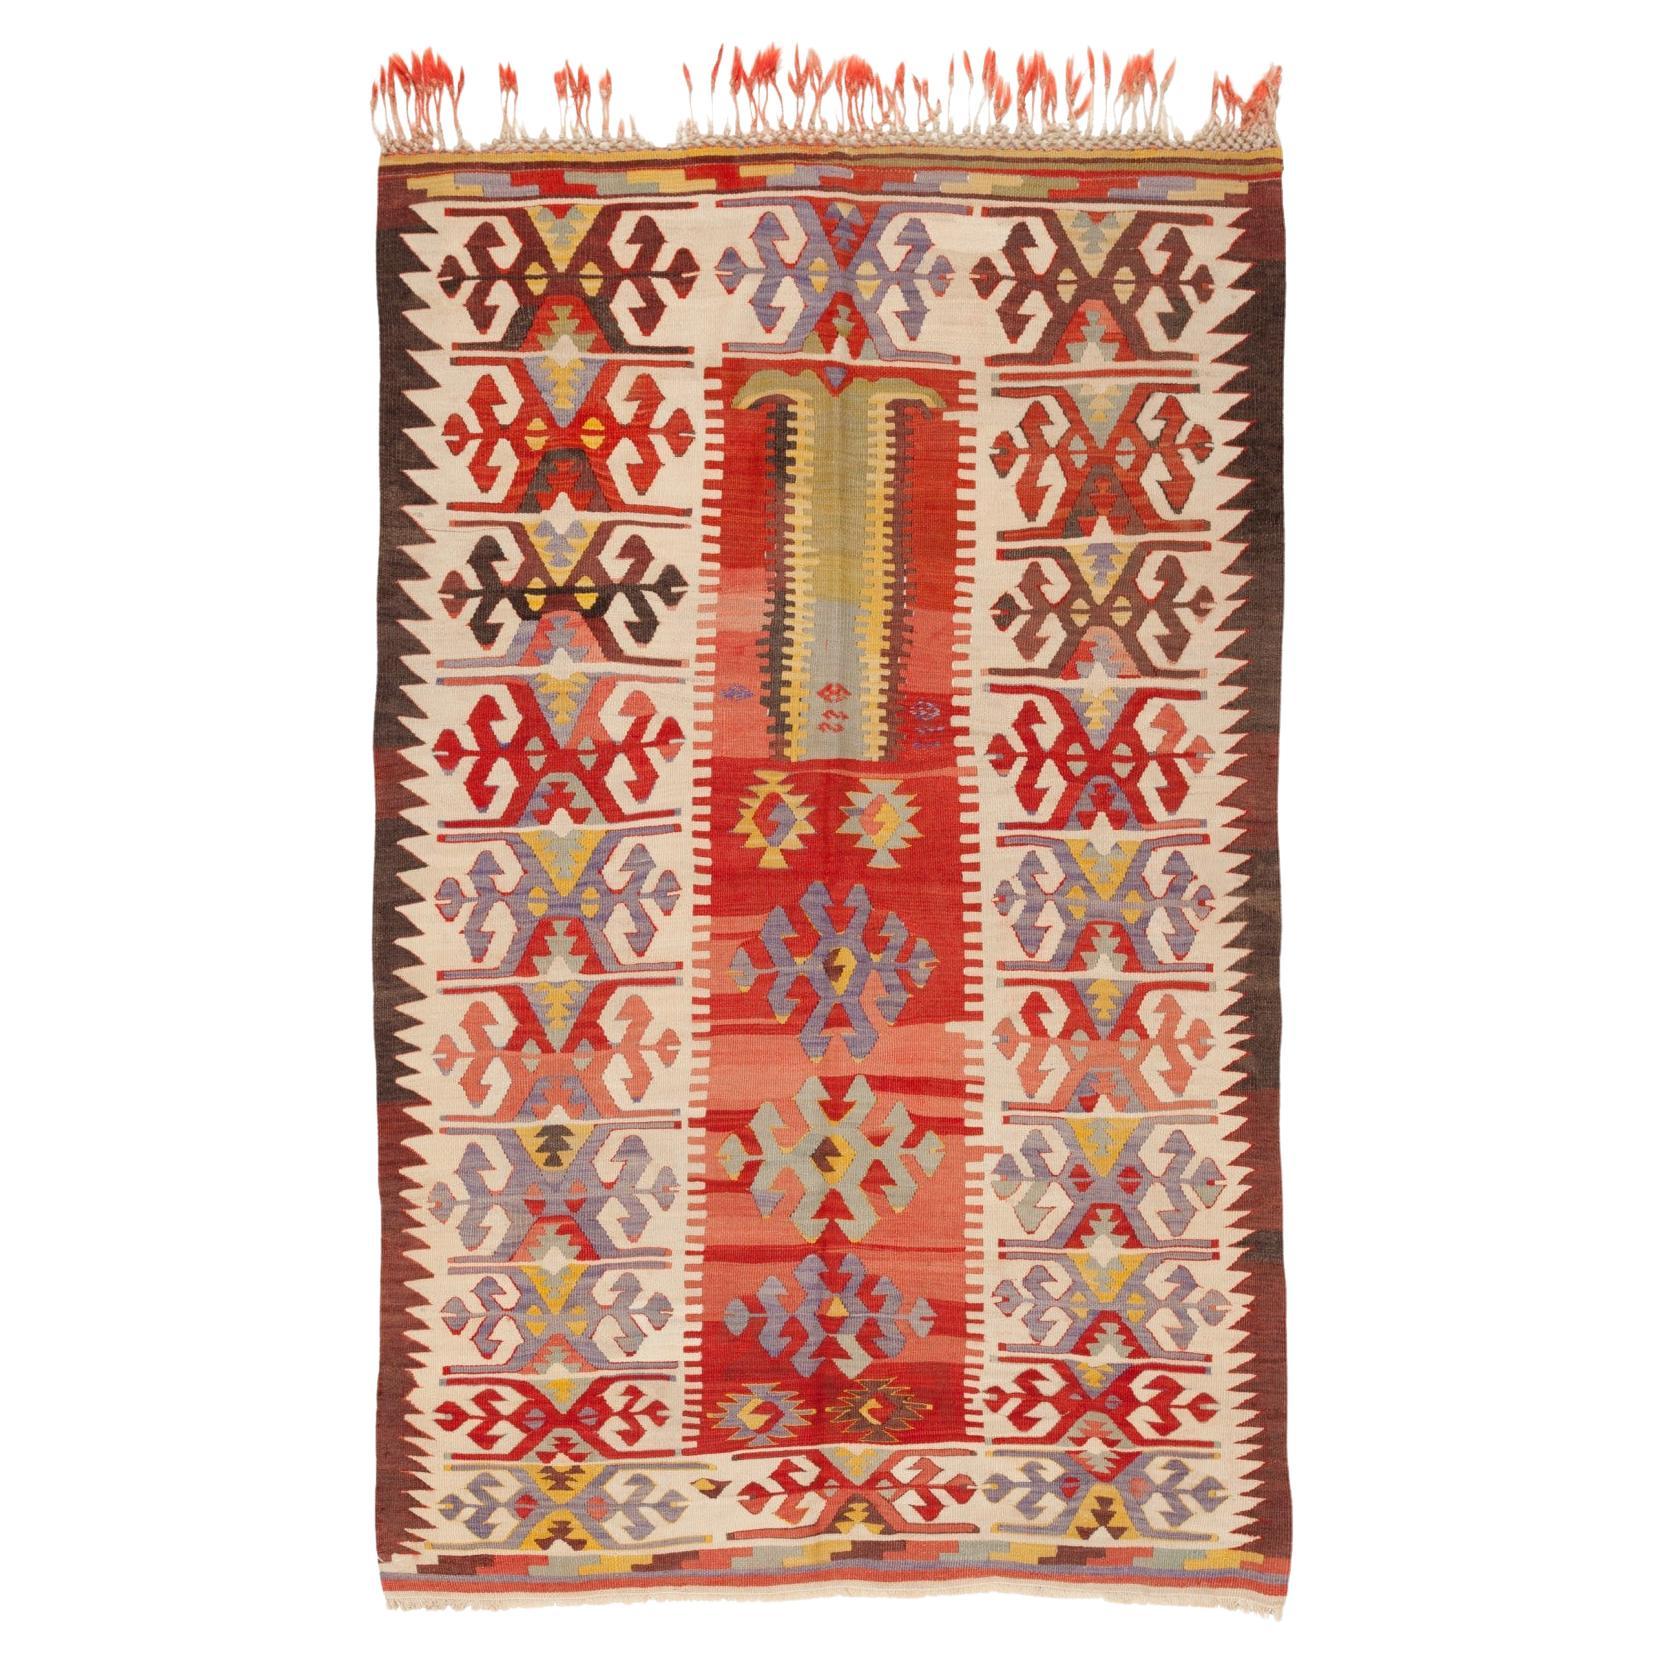 Ancien tapis Kilim d'Aydin, vieux tapis turc vintage d'Anatolie occidentale